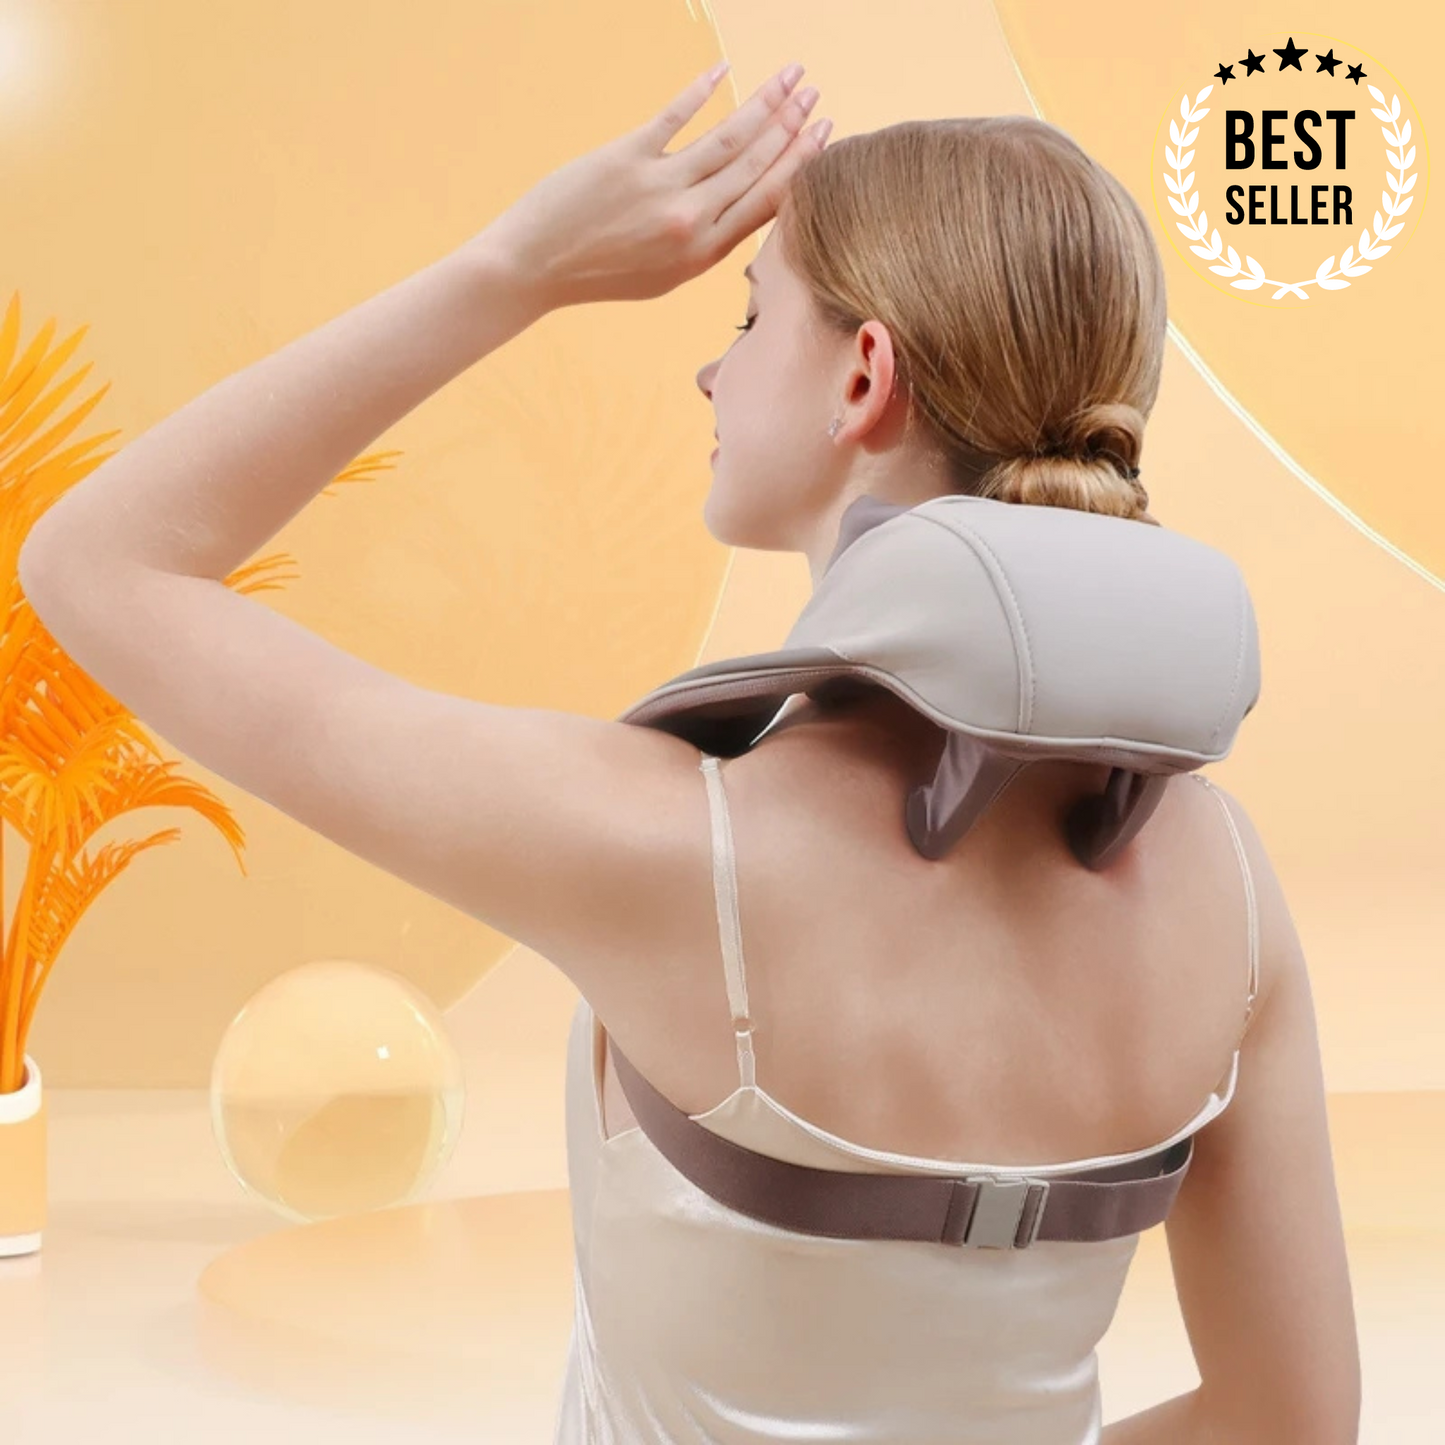 PostureFlex™ Shoulder Pain Relief Massager: Say Goodbye to Discomfort"
"PostureFlex™ 